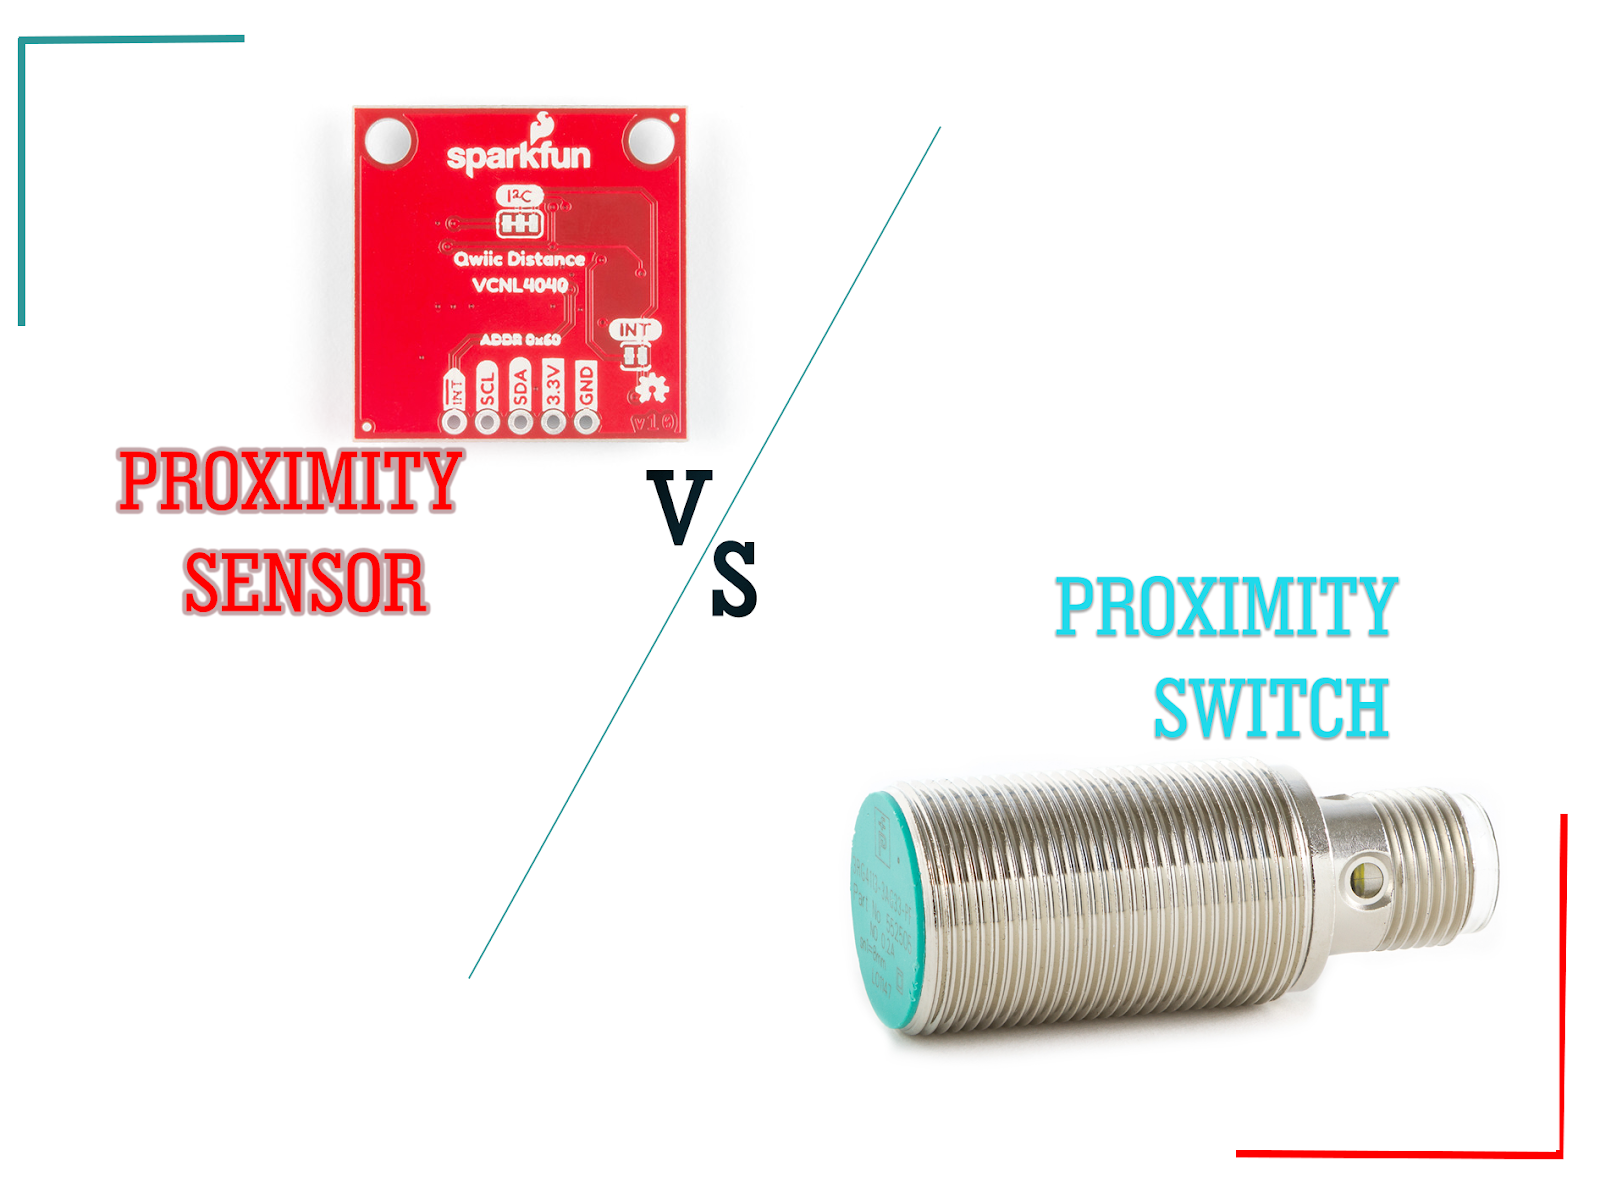 Proximity Sensor vs. Proximity Switch